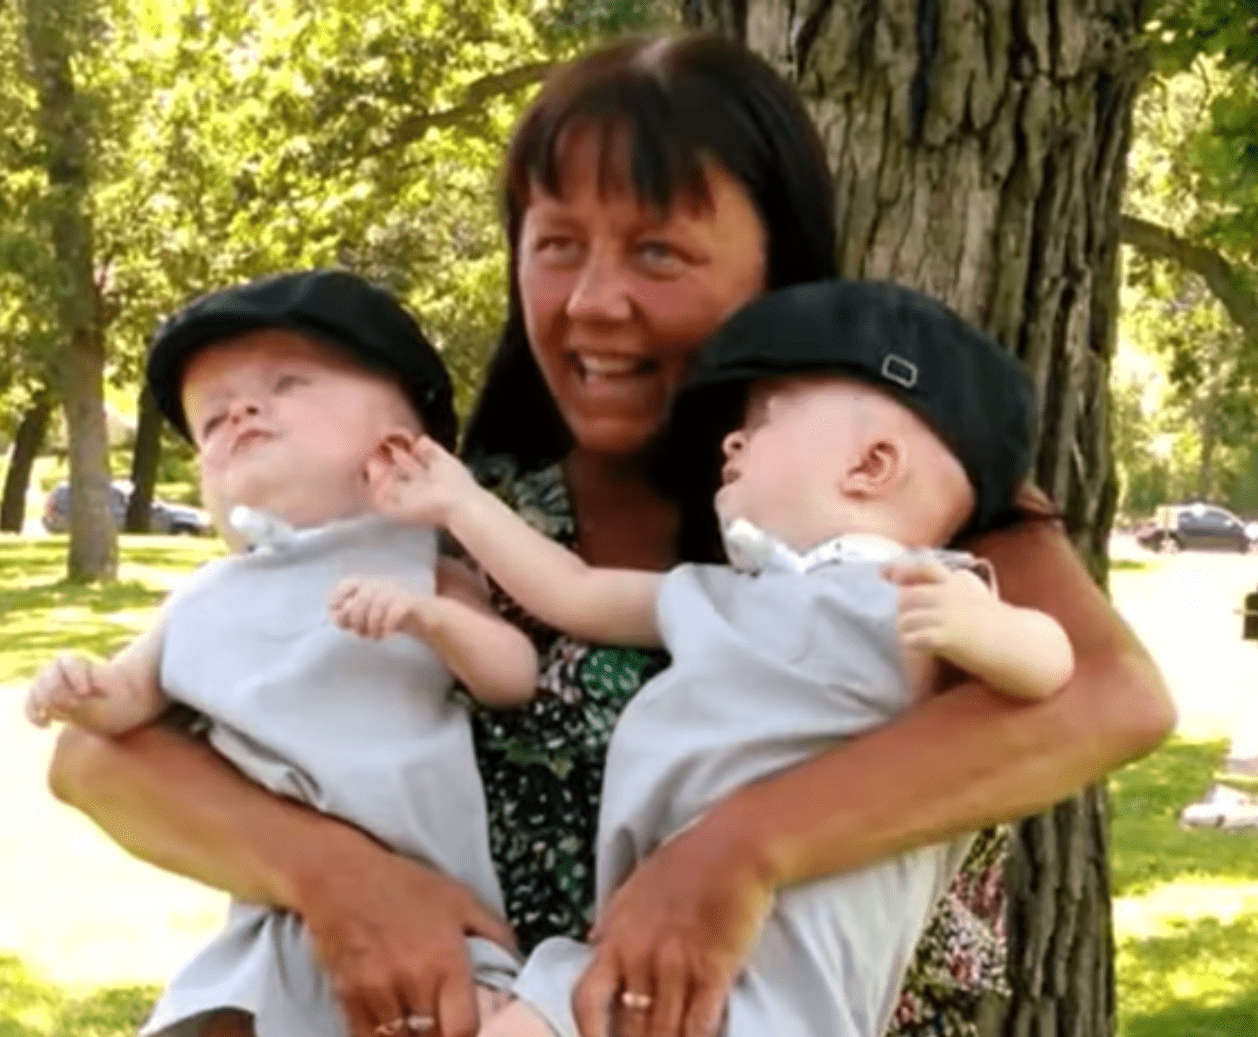 Linda Trepanier with 3-year-old twins Matthew and Marshall Trepanier. │Source: youtube.com/Inside Edition